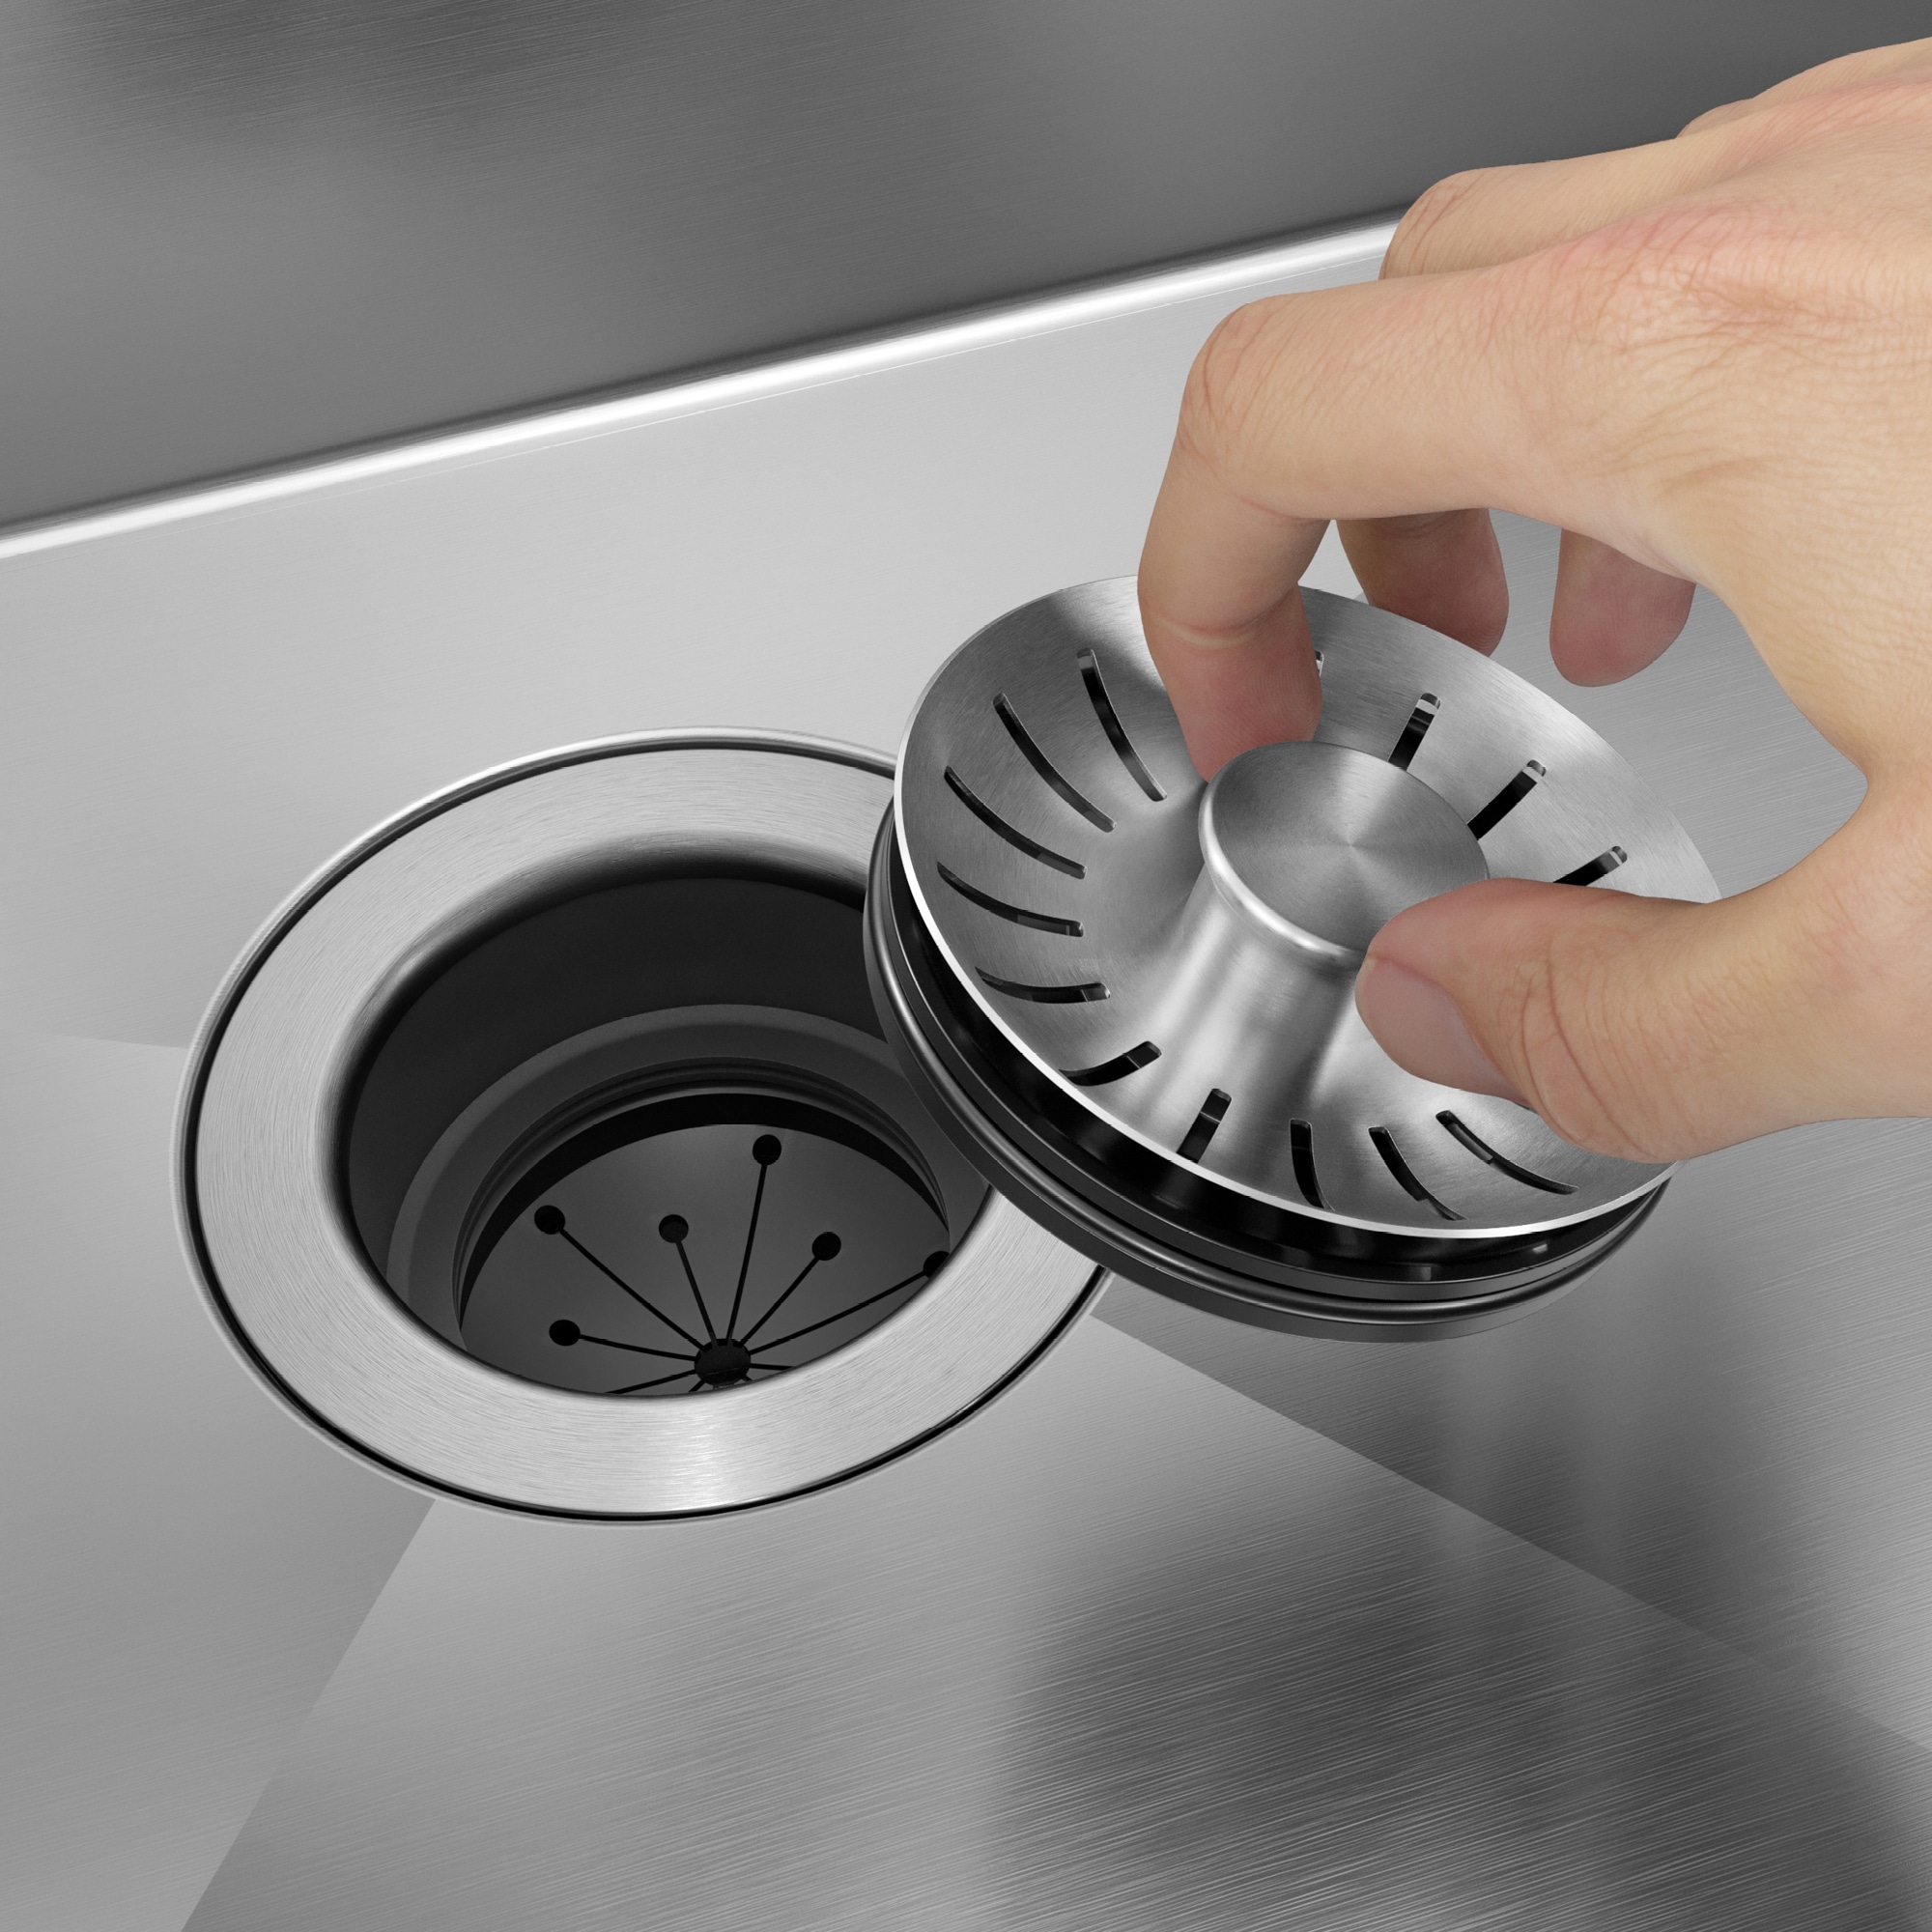 Kitchen Sink Stopper: Universal for Garbage Disposal